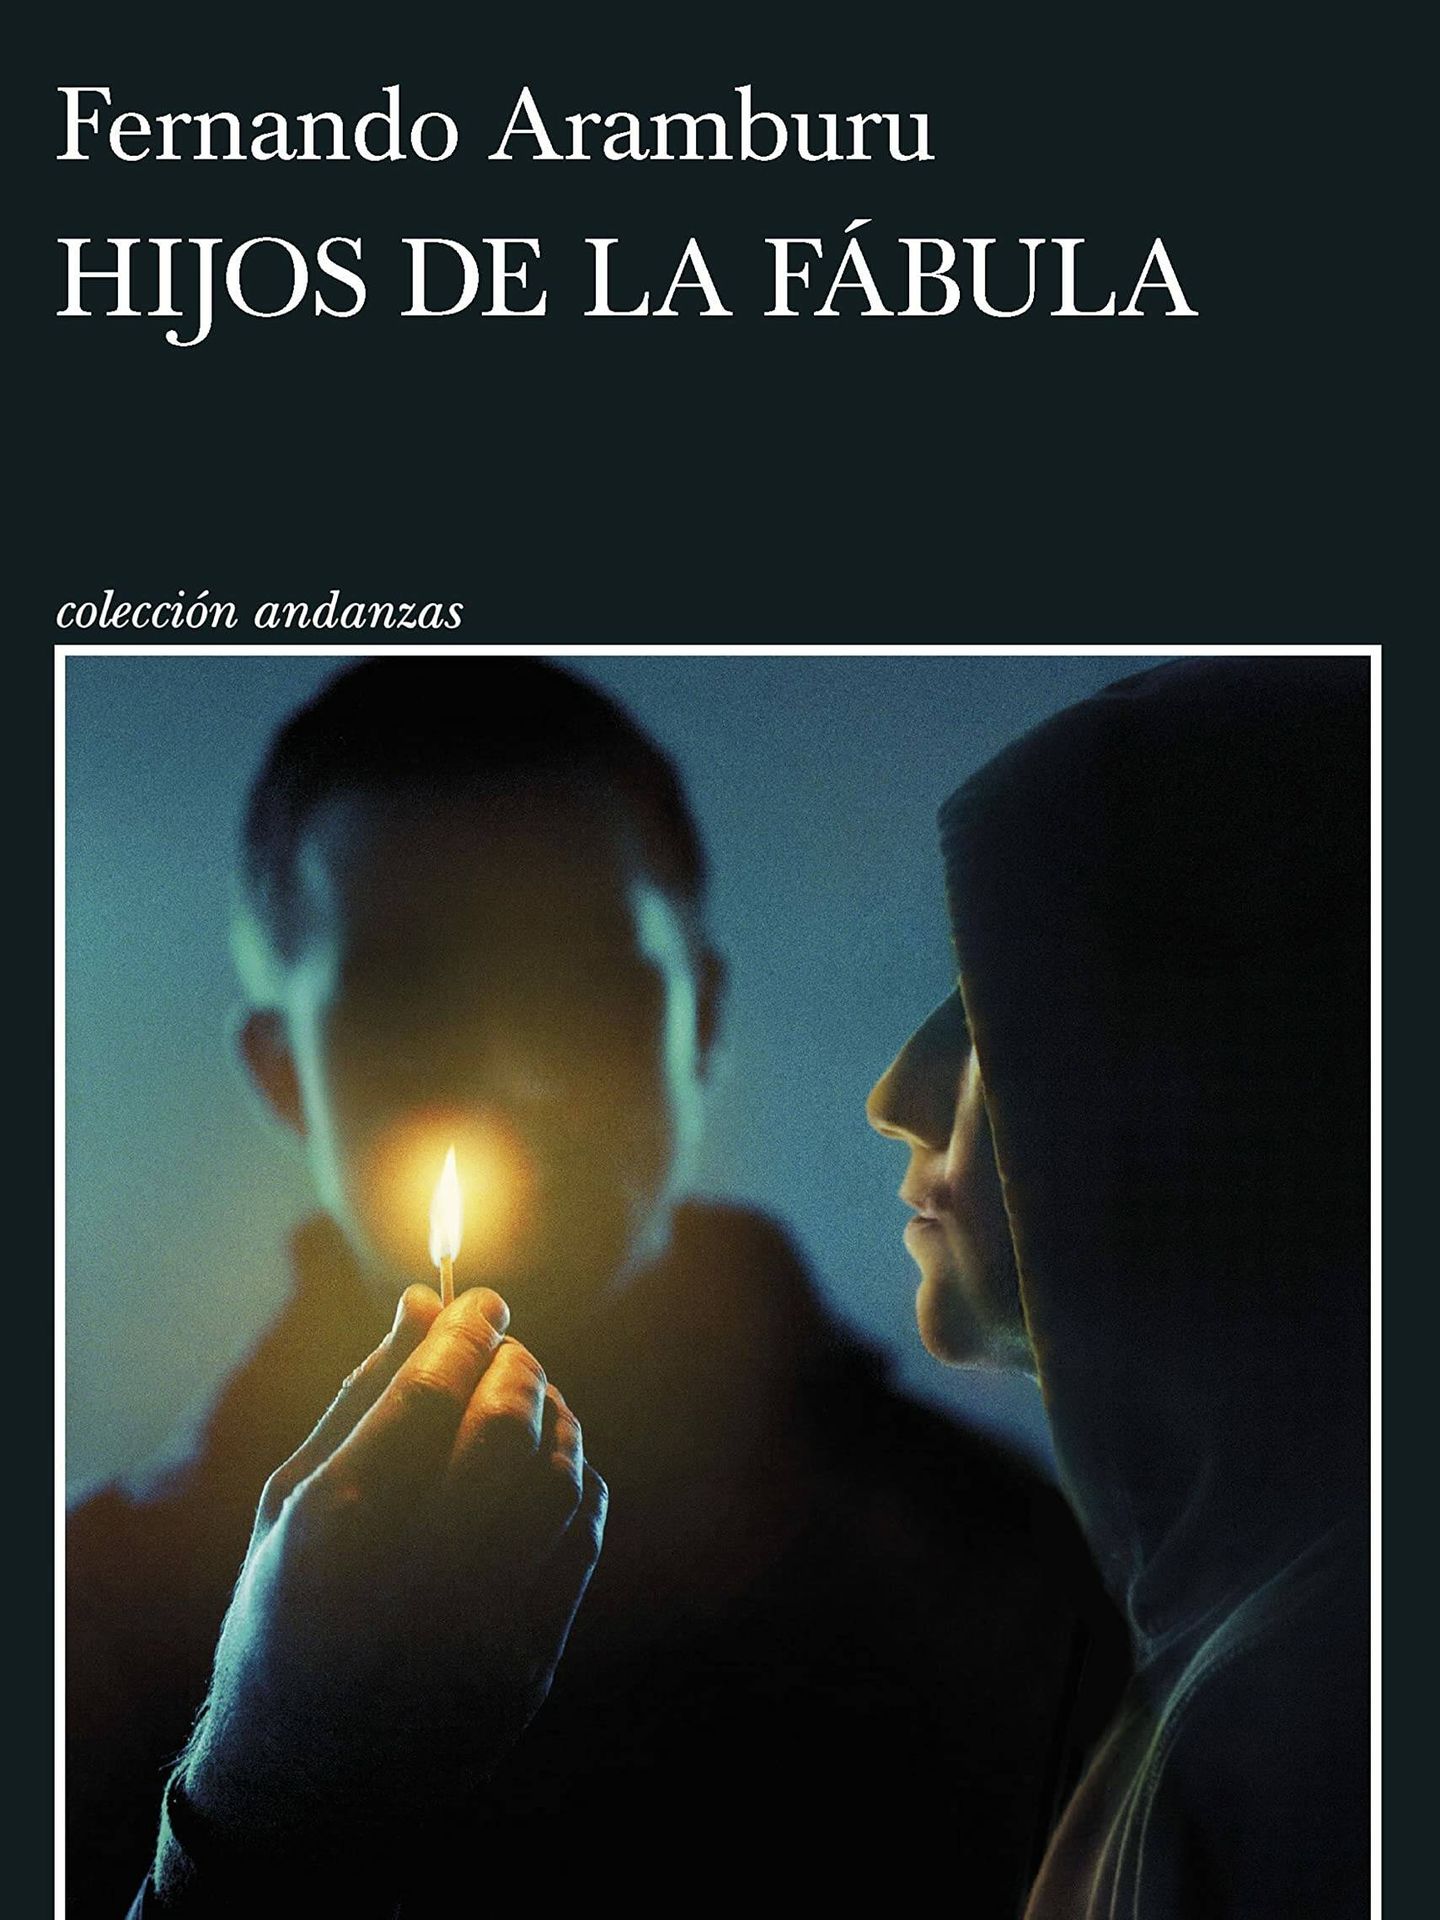 'Hijos de la fábula', de Fernando Aramburu.